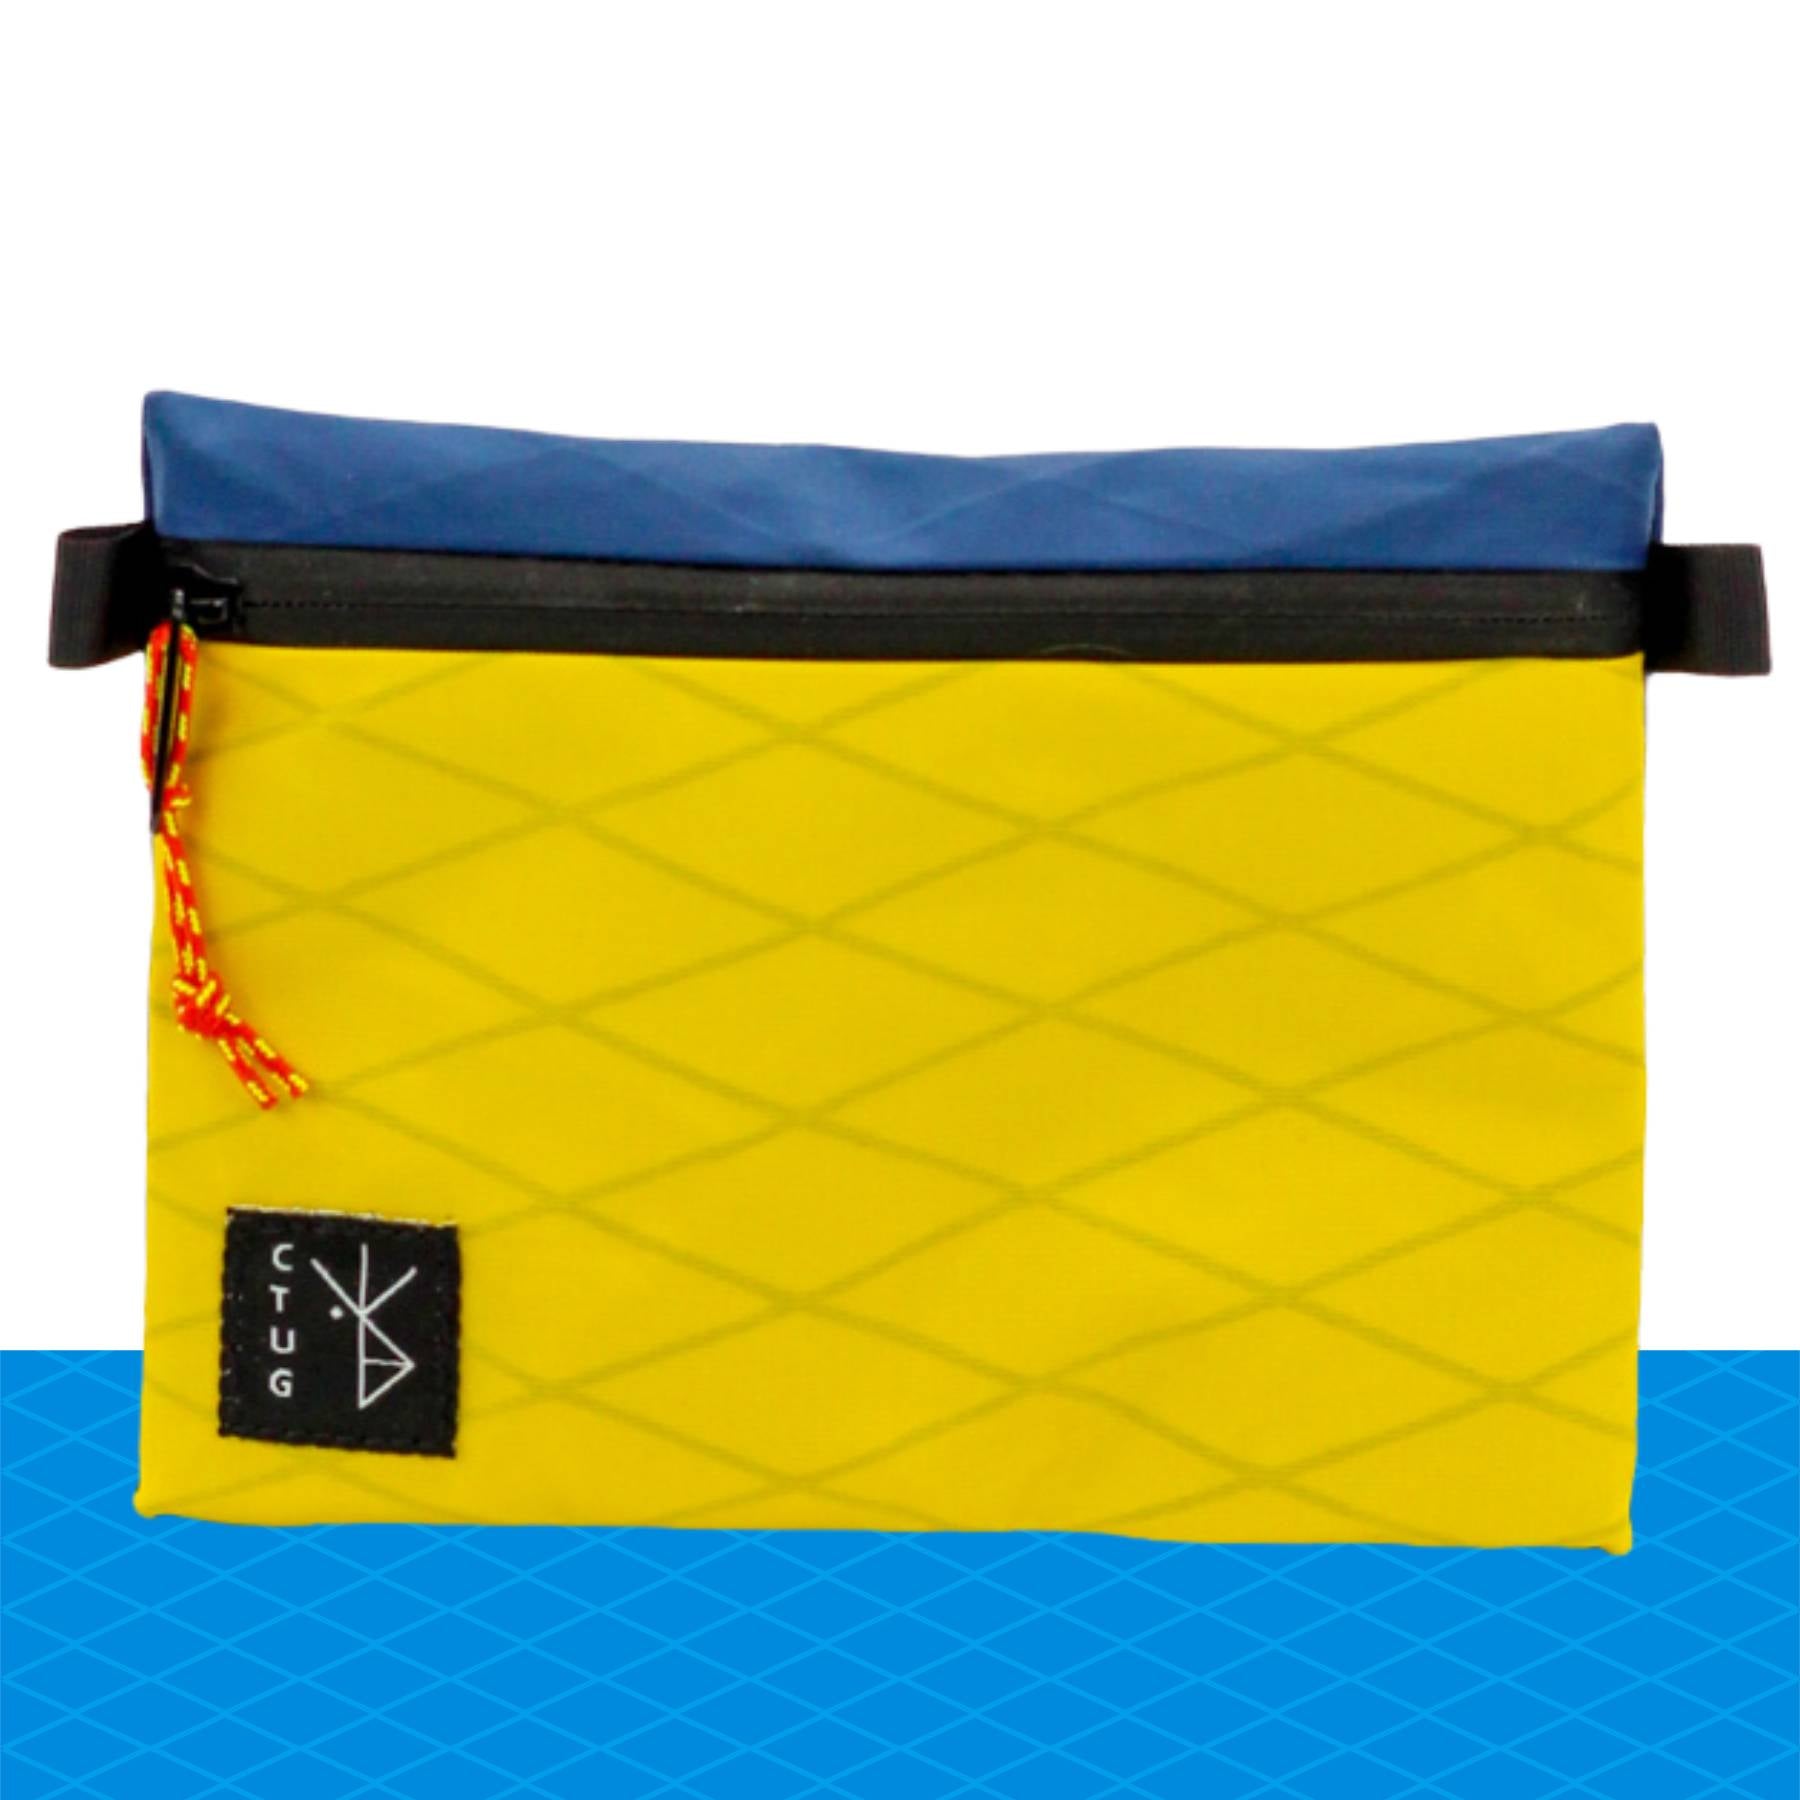 CTUG yellow/navy color wallet